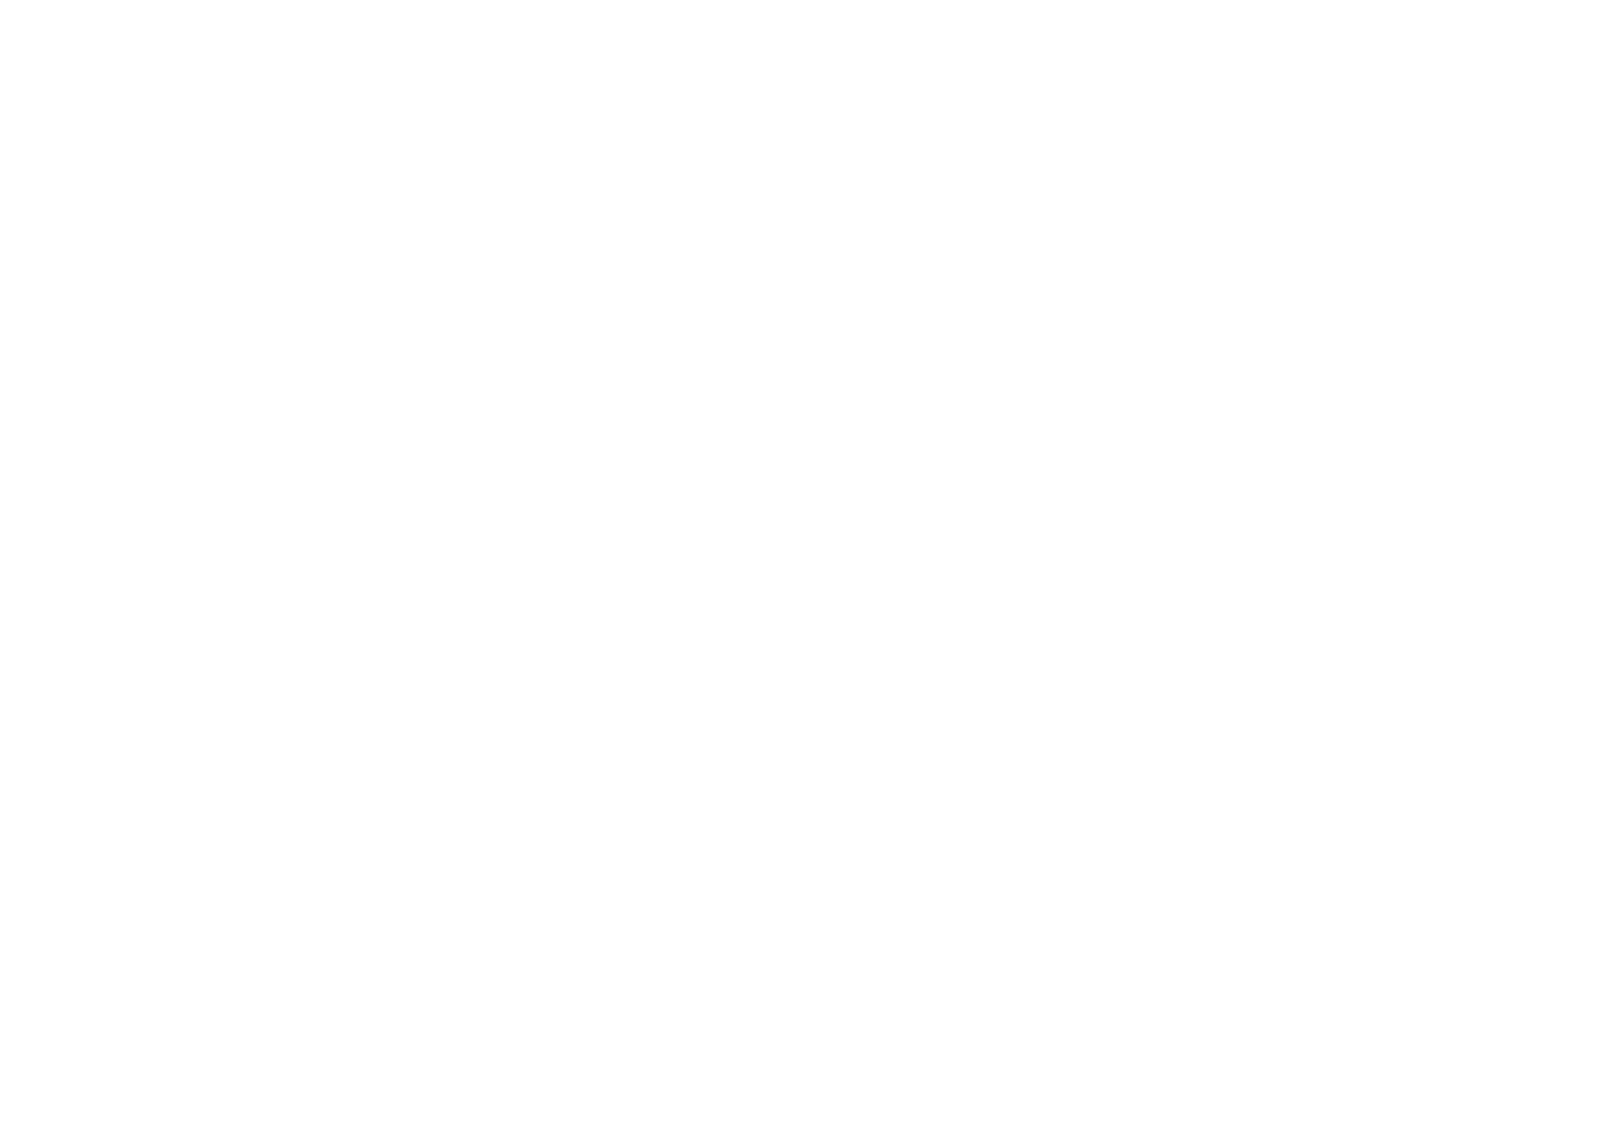 Flaherty Photography